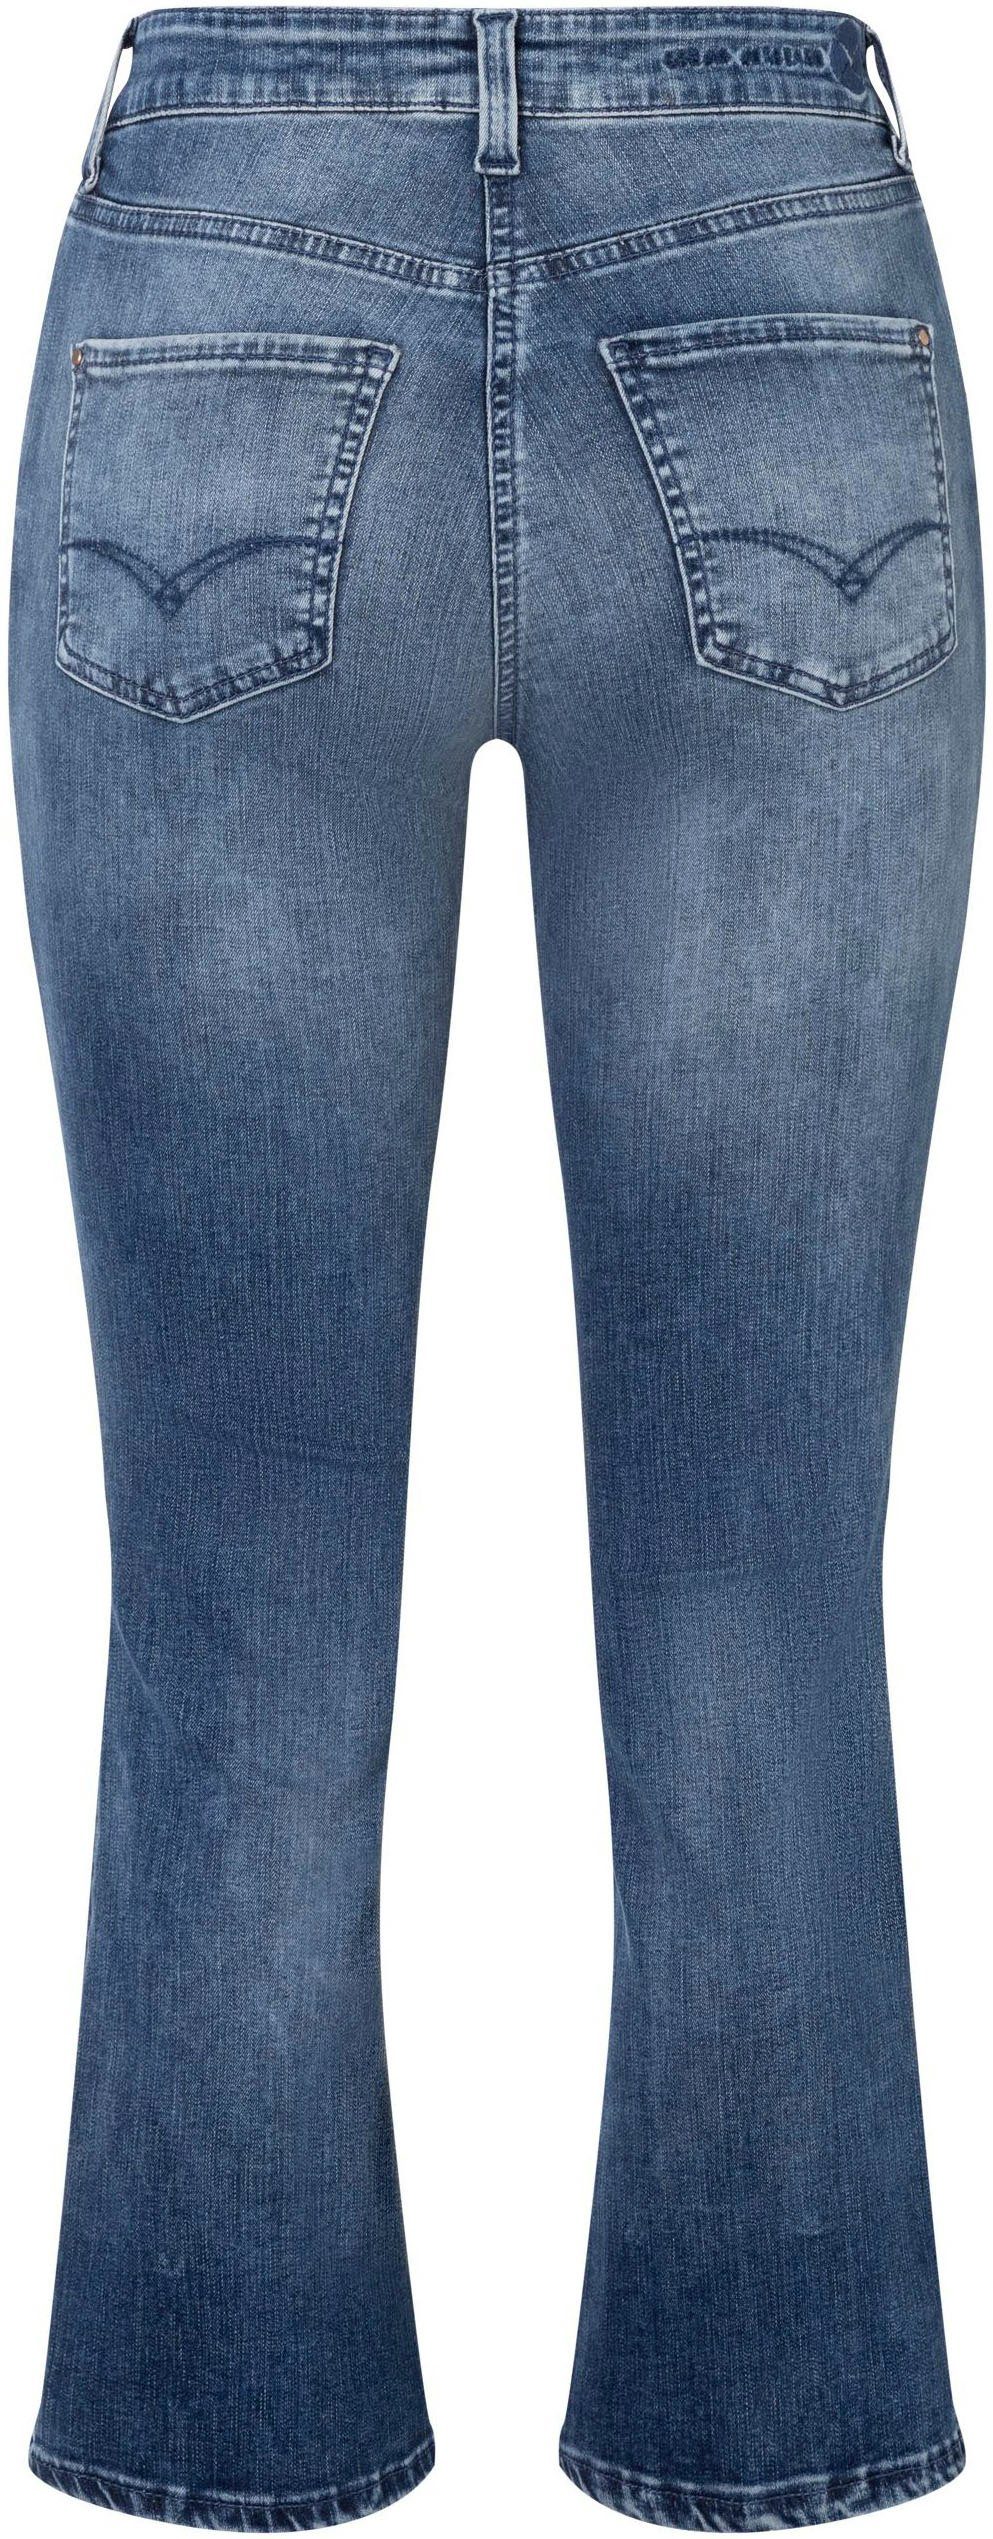 MAC Saum blue verkürzt ausgestellt 3/4-Jeans Dream dk modisch Kick washed leicht und